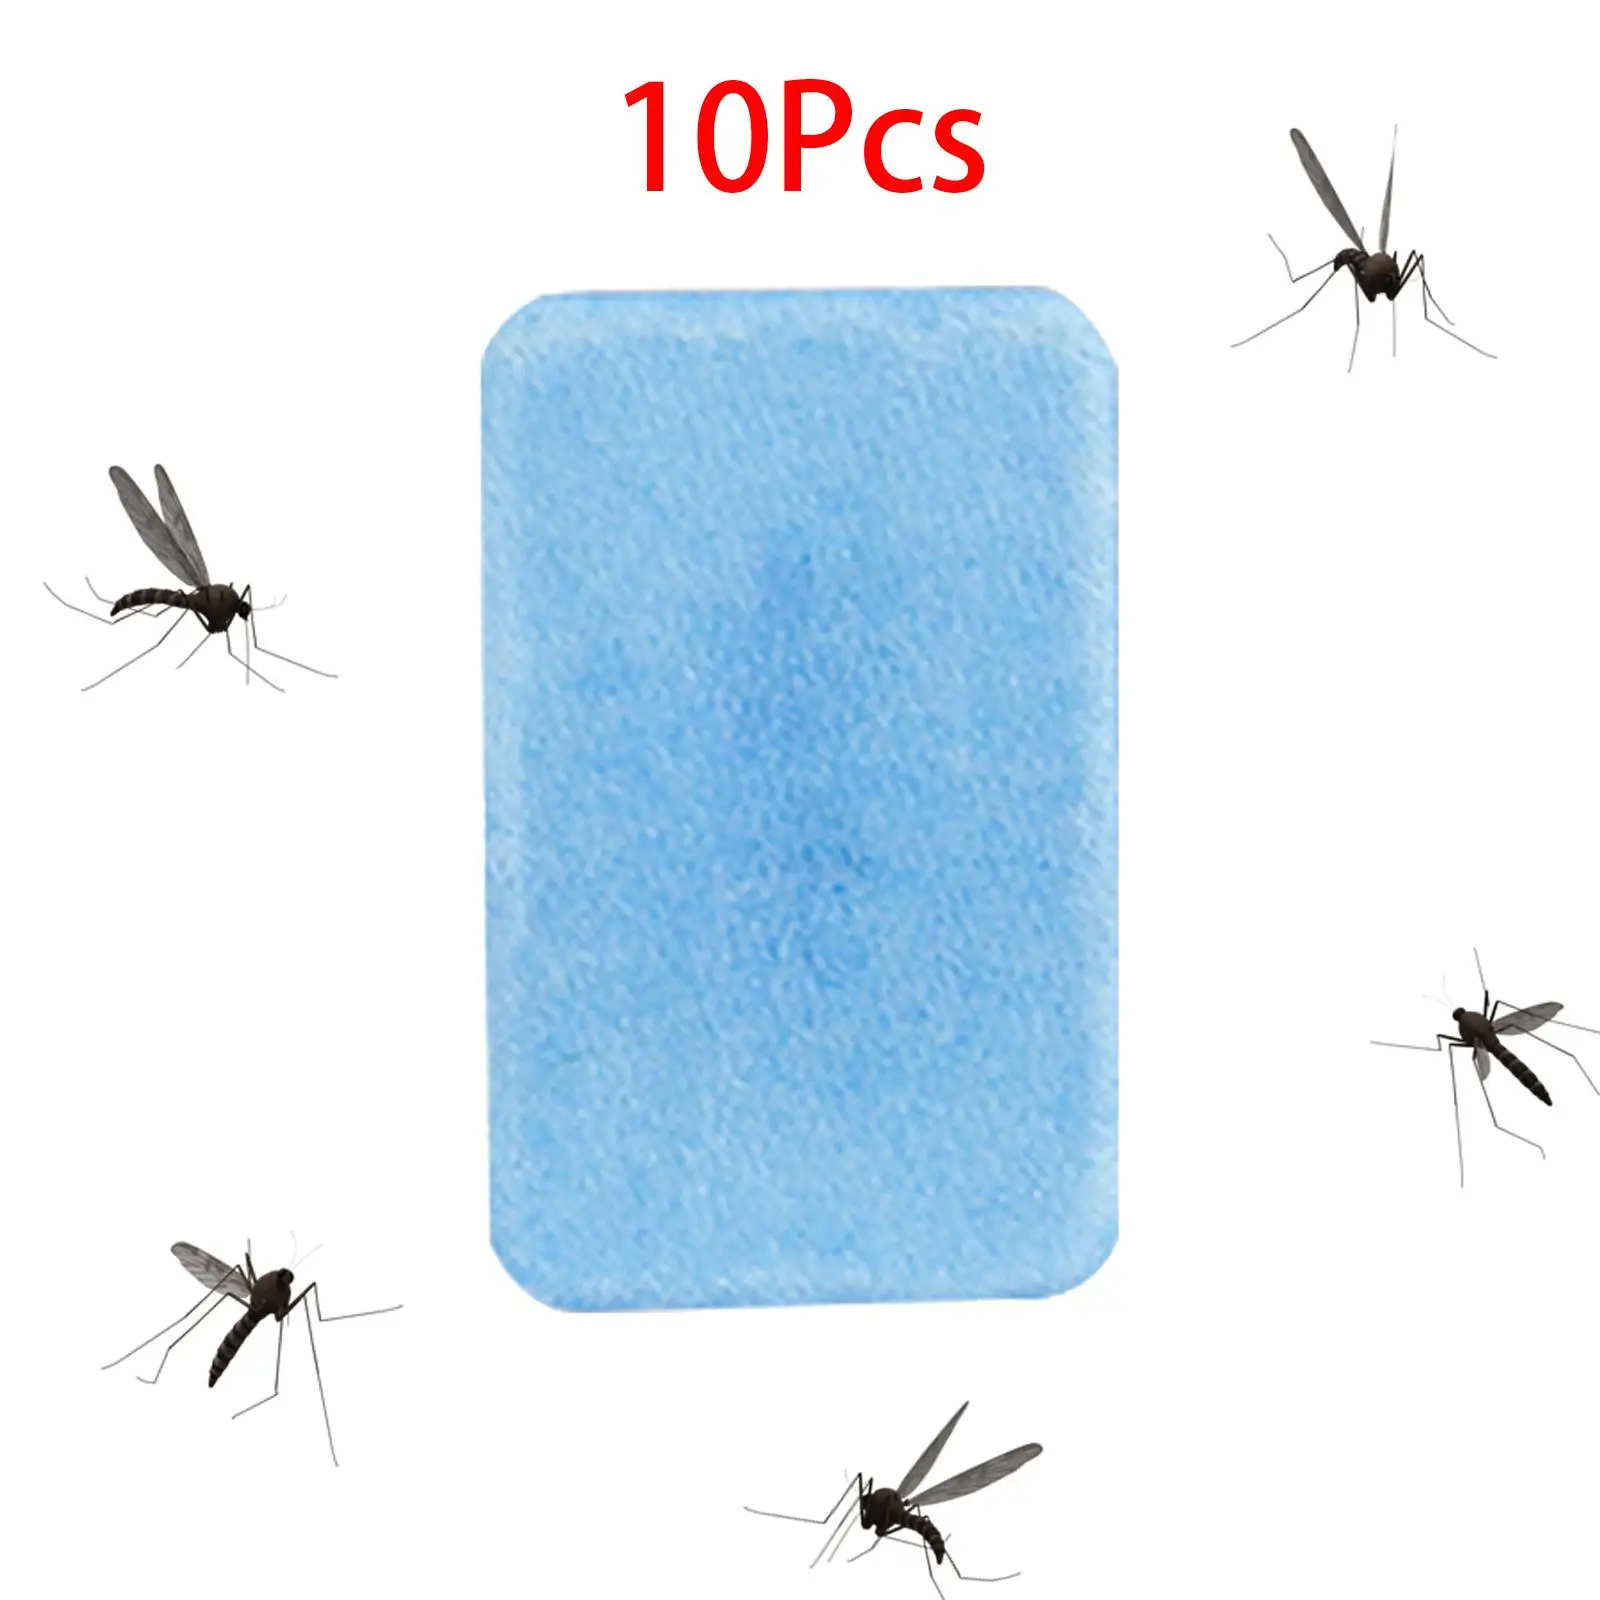 10Pcs Mosquito Repellent Mosquito Killer Compact Bug Killer Lightweight for Patio Indoor Home Outdoor Yard